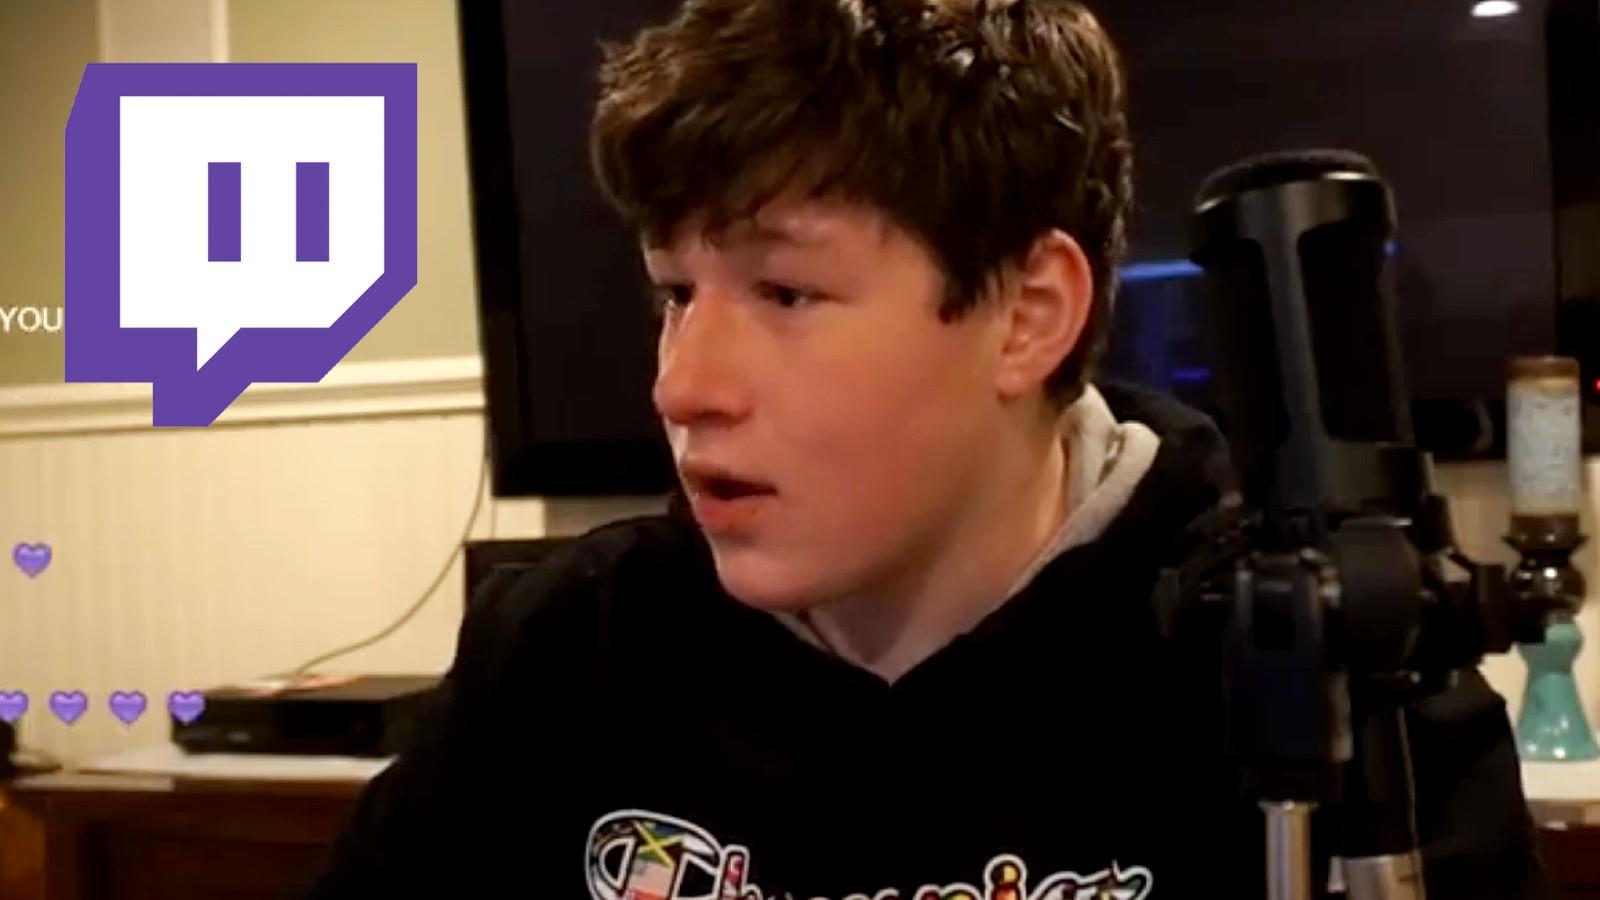 Twitch stream Nathan streams next to the Twitch logo